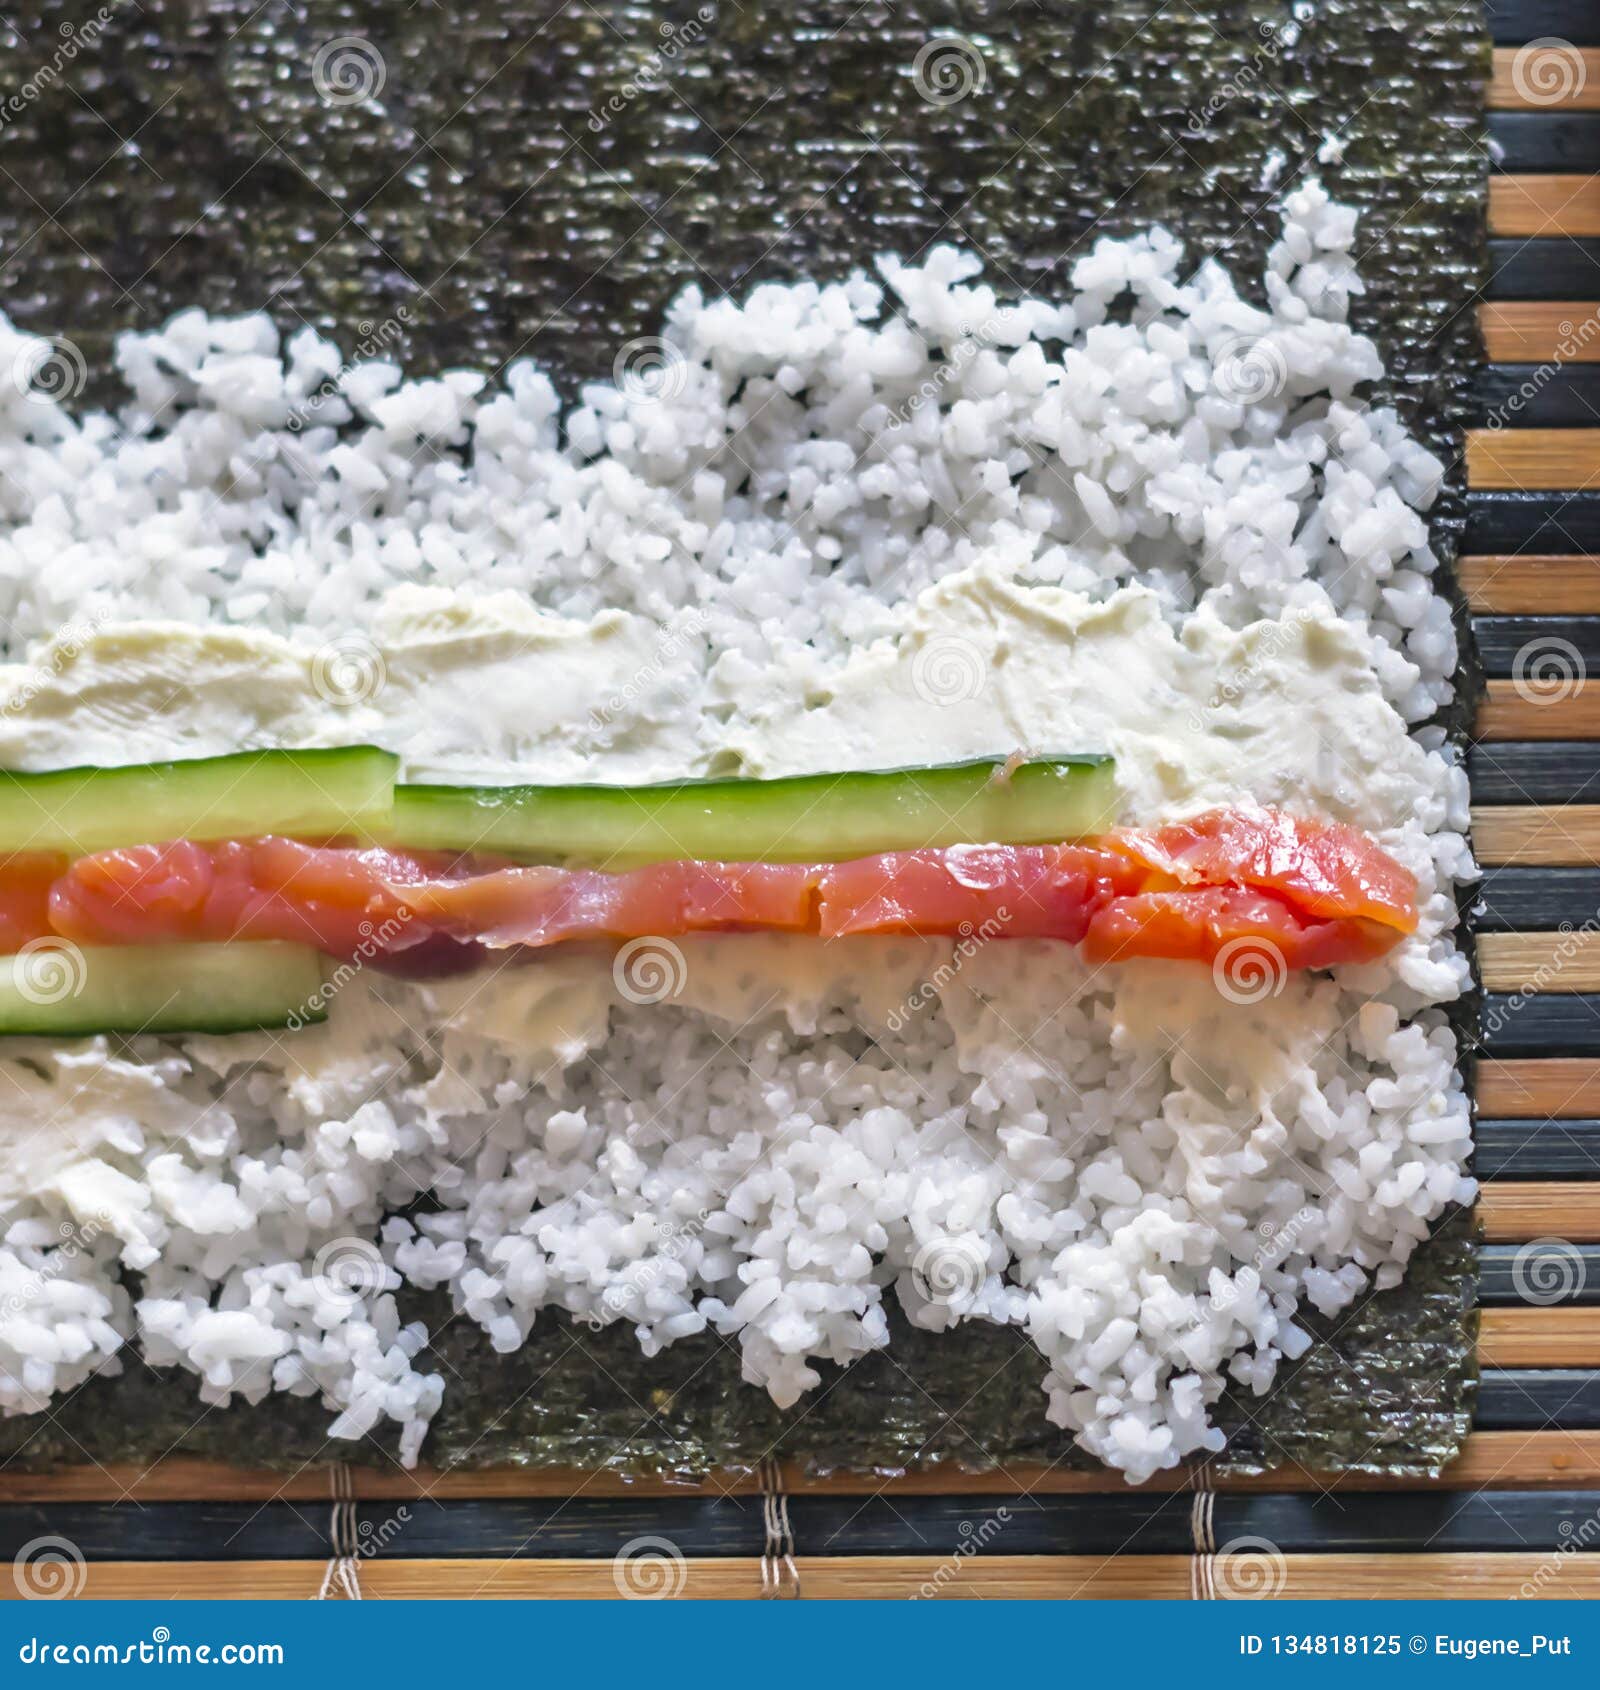 https://thumbs.dreamstime.com/z/making-sushi-rolls-salmon-fish-strips-cucumber-sticks-cream-cheese-rice-nori-seaweed-sheet-bamboo-mat-134818125.jpg